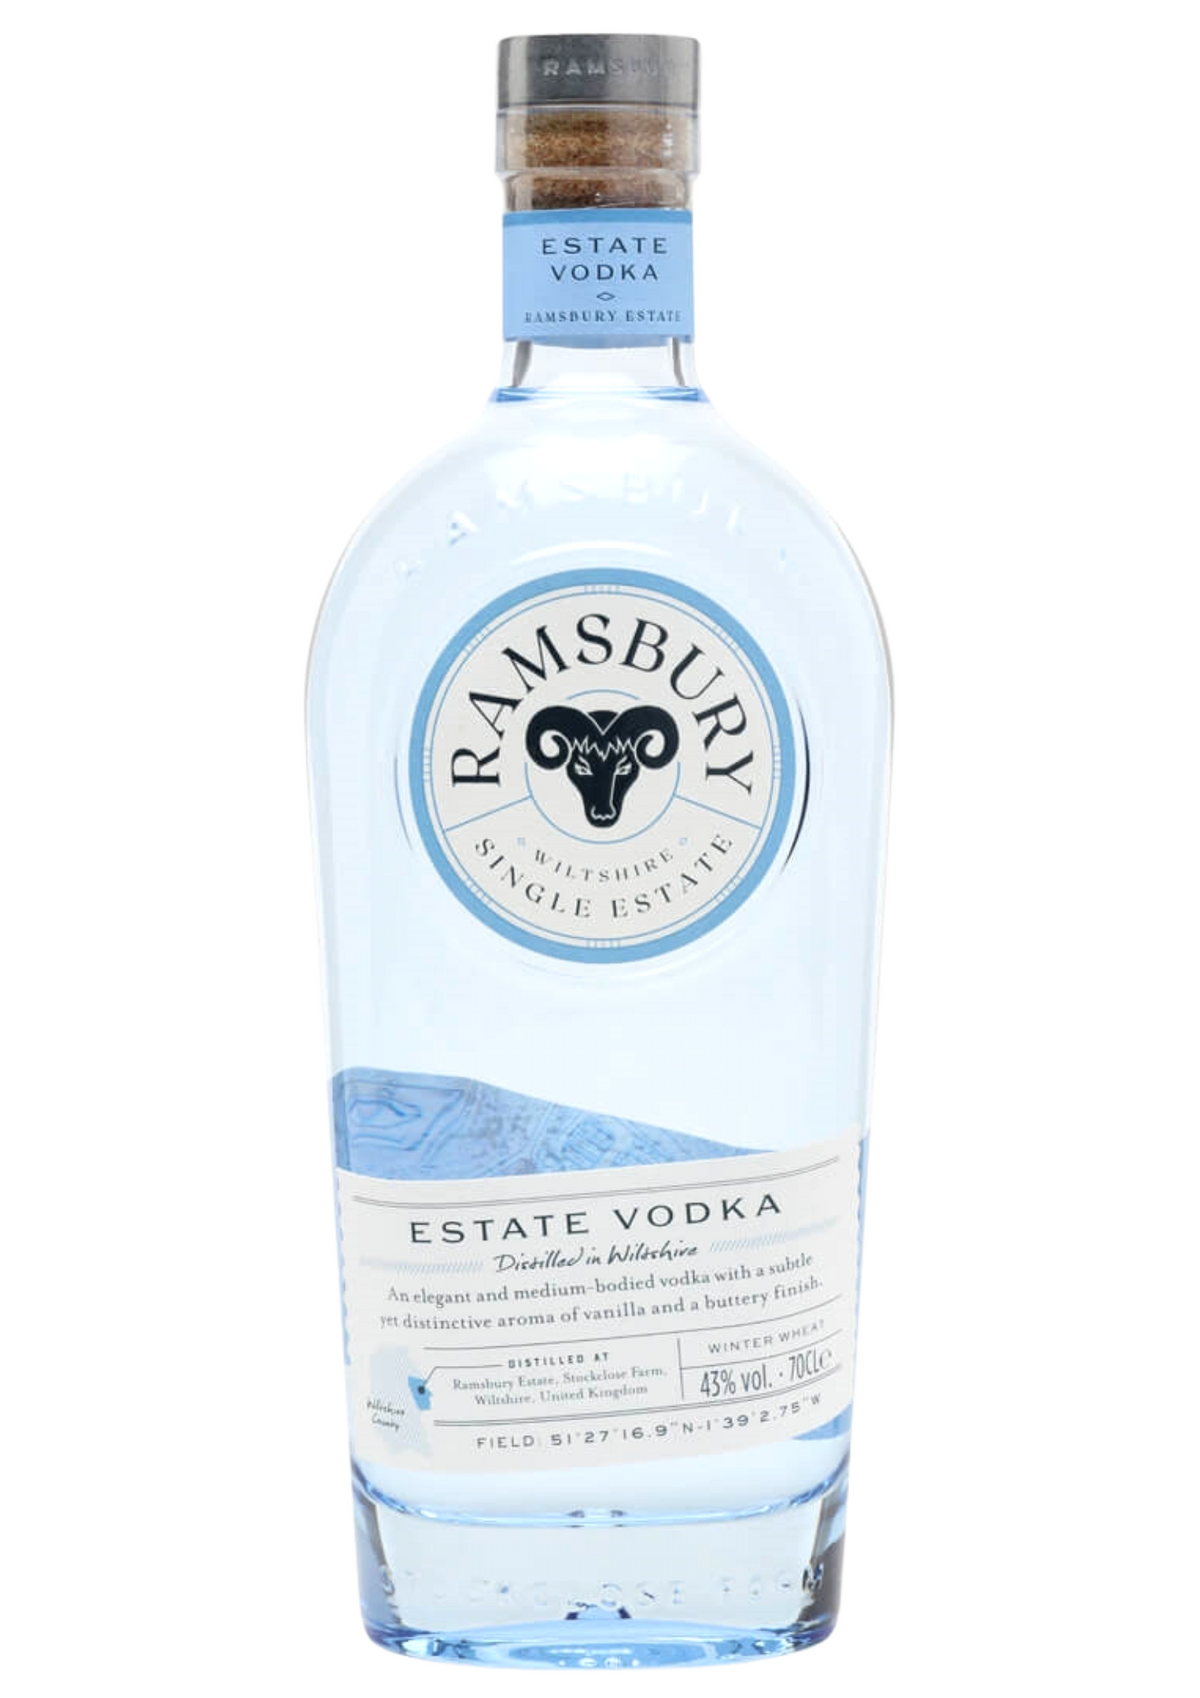 Bottle of Ramsbury Single Estate Vodka, 43% - The Spirits Room